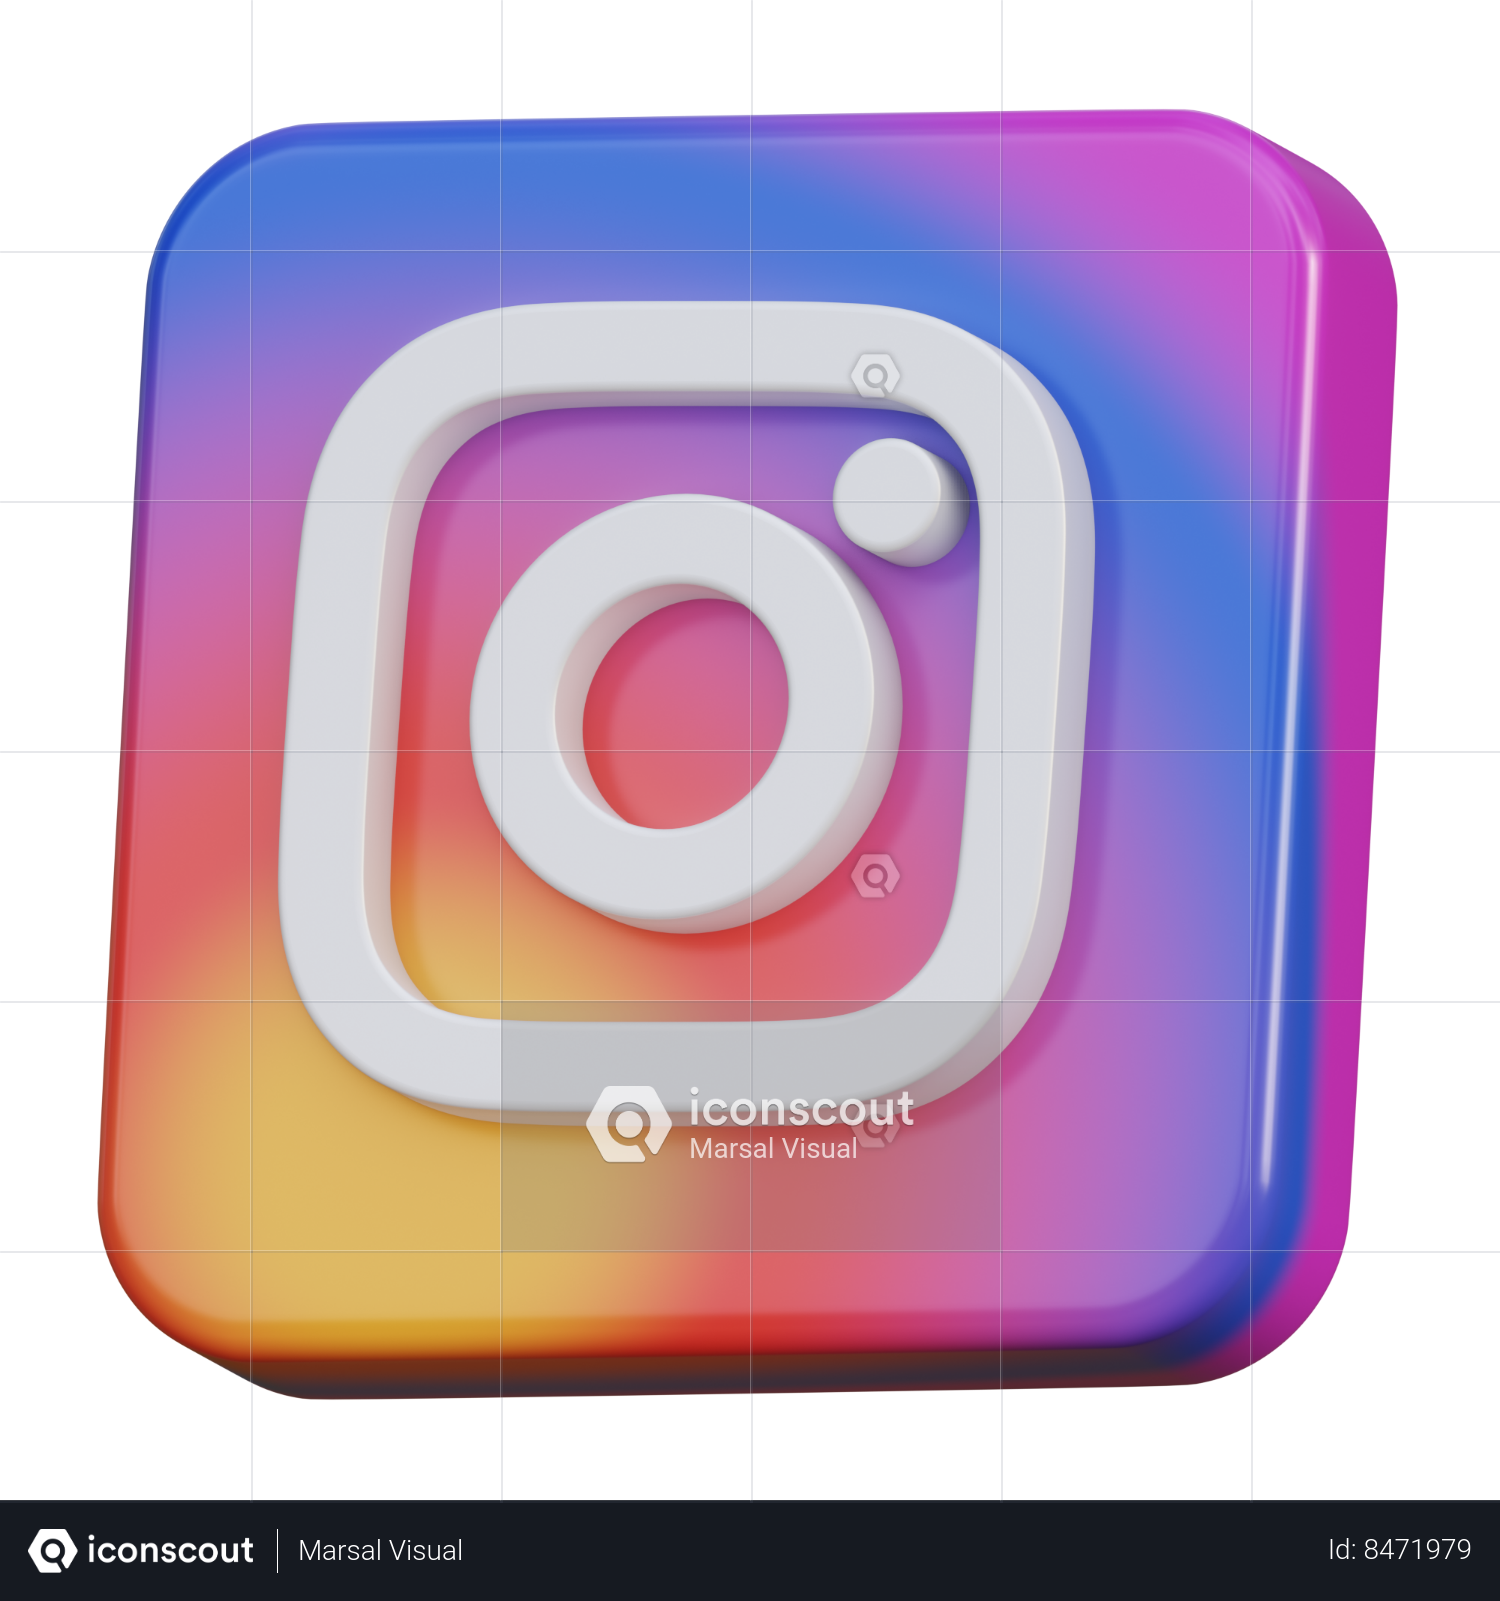 Instagram logo Images • 🇲A͢🆂🅾🄾𝕄 𝐃𝐈𝐋♡ﮩ٨ـﮩ✨ (@_alone_creater) on  ShareChat